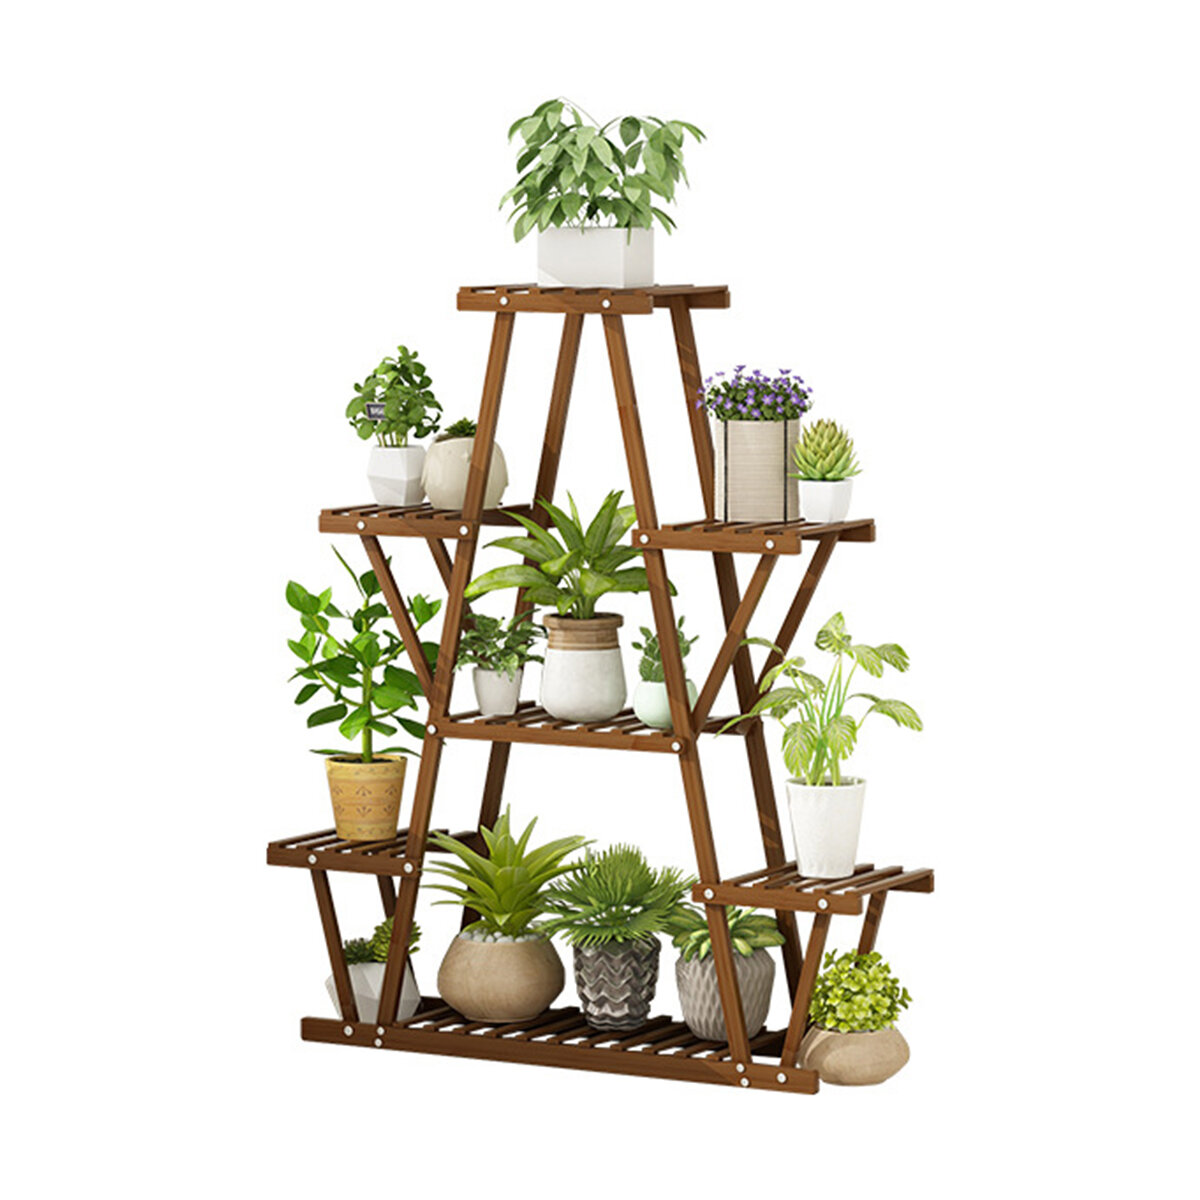 

Multi-Tier Plant Rack Flower Pot Stand Wood Garden Storage Shelf Display Rack Home Office Furniture